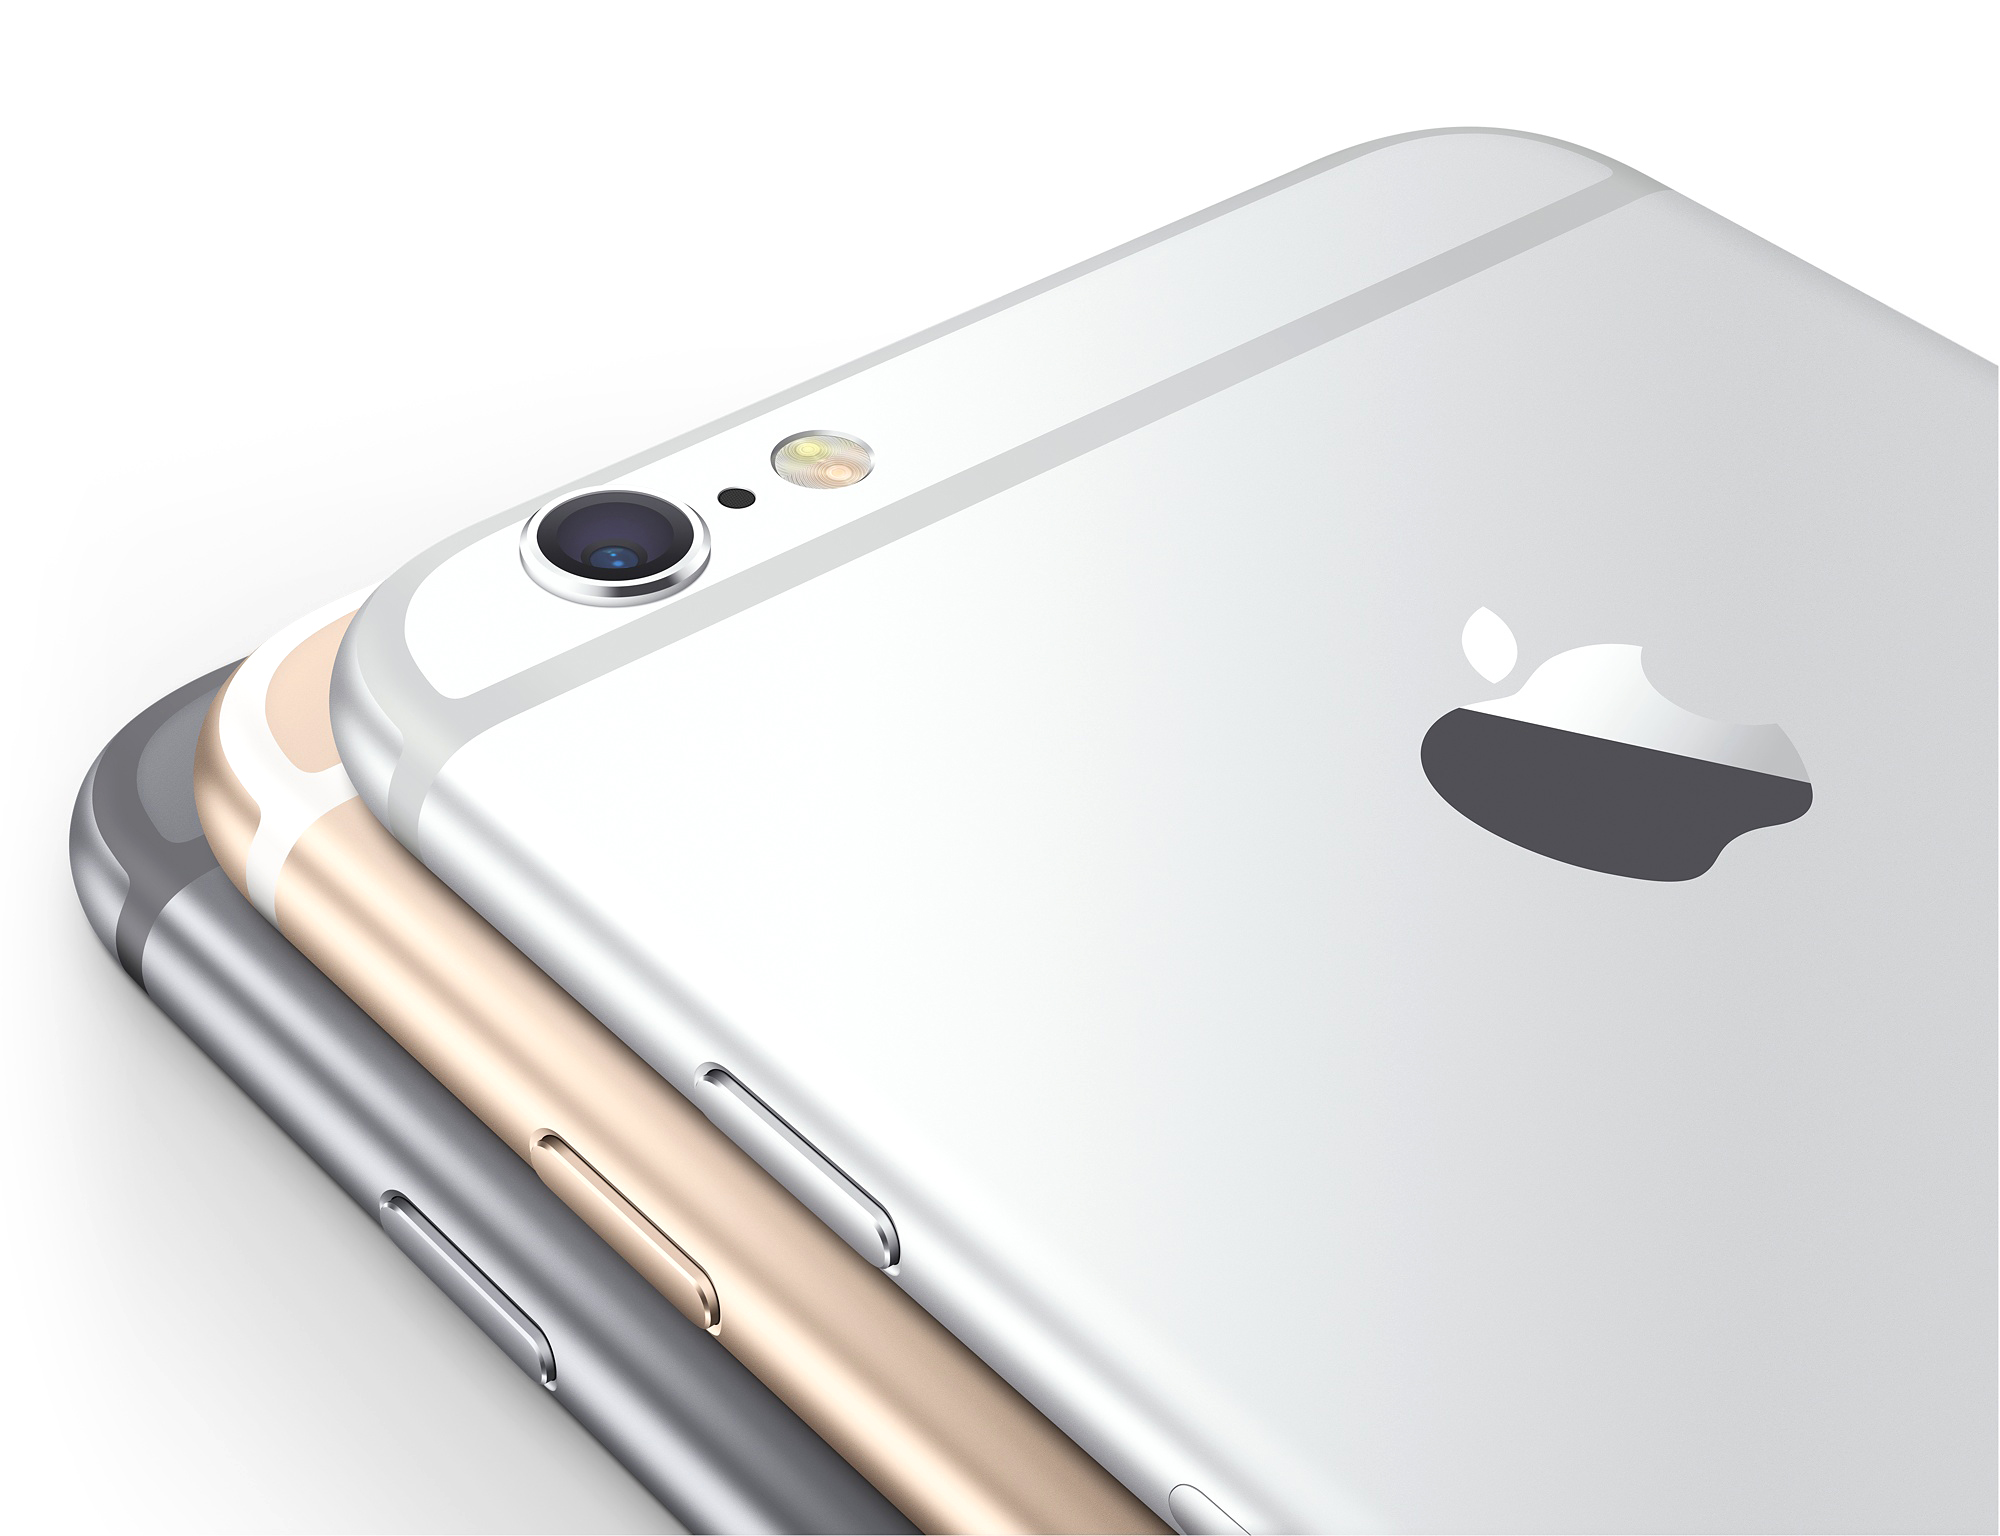 Apple iPhone 6s Plus 32GB Rose Gold (MN2Y2)